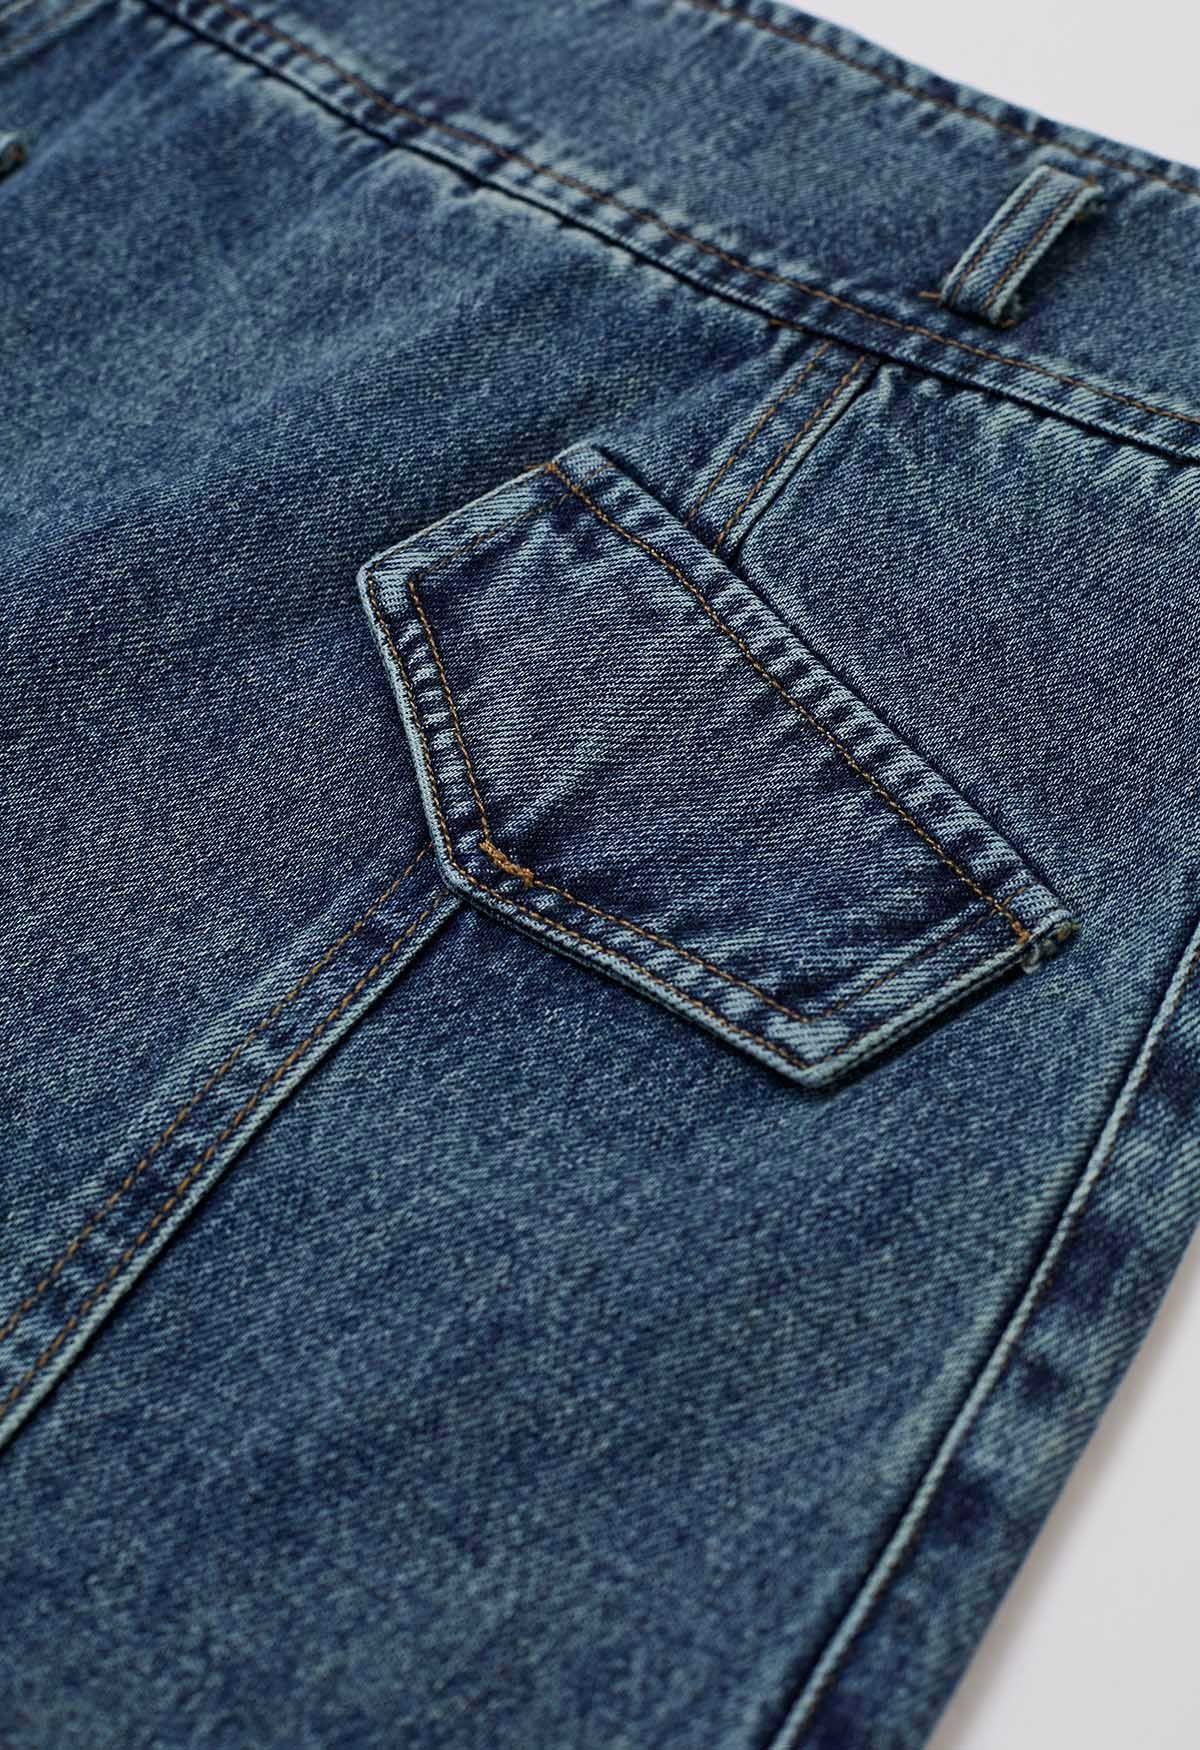 Falda pantalón vaquera con cinturón y bolsillos falsos con solapa en azul